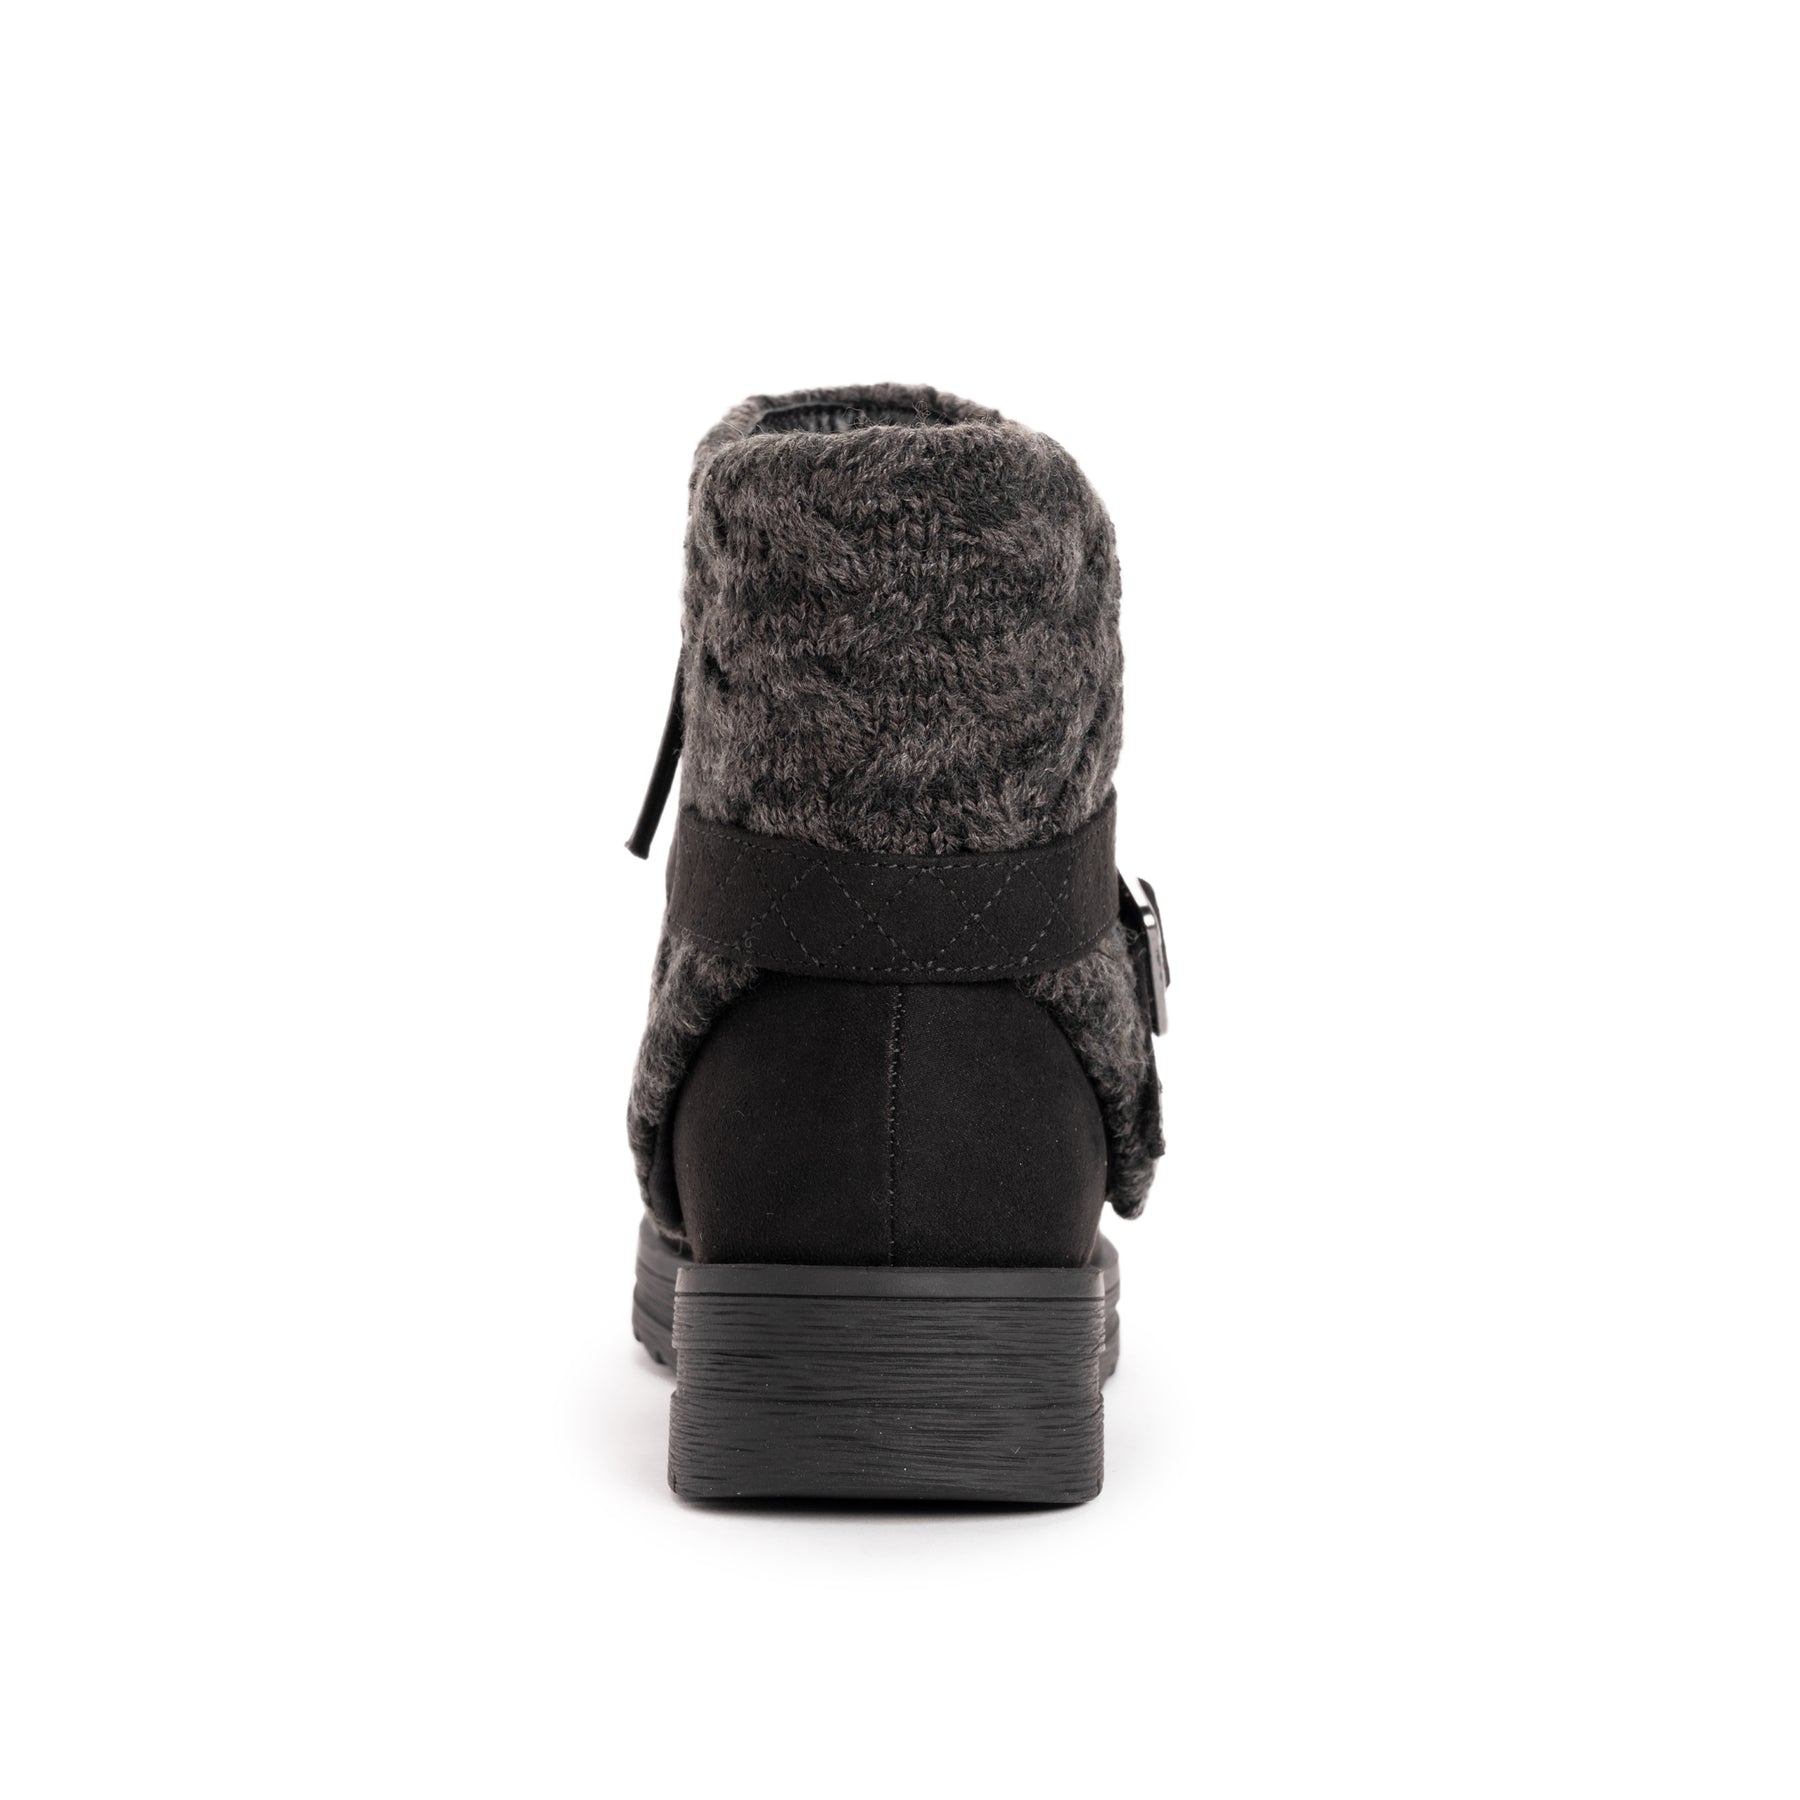 Muk Luks Blanket Cuff Winter Boots - Naomi